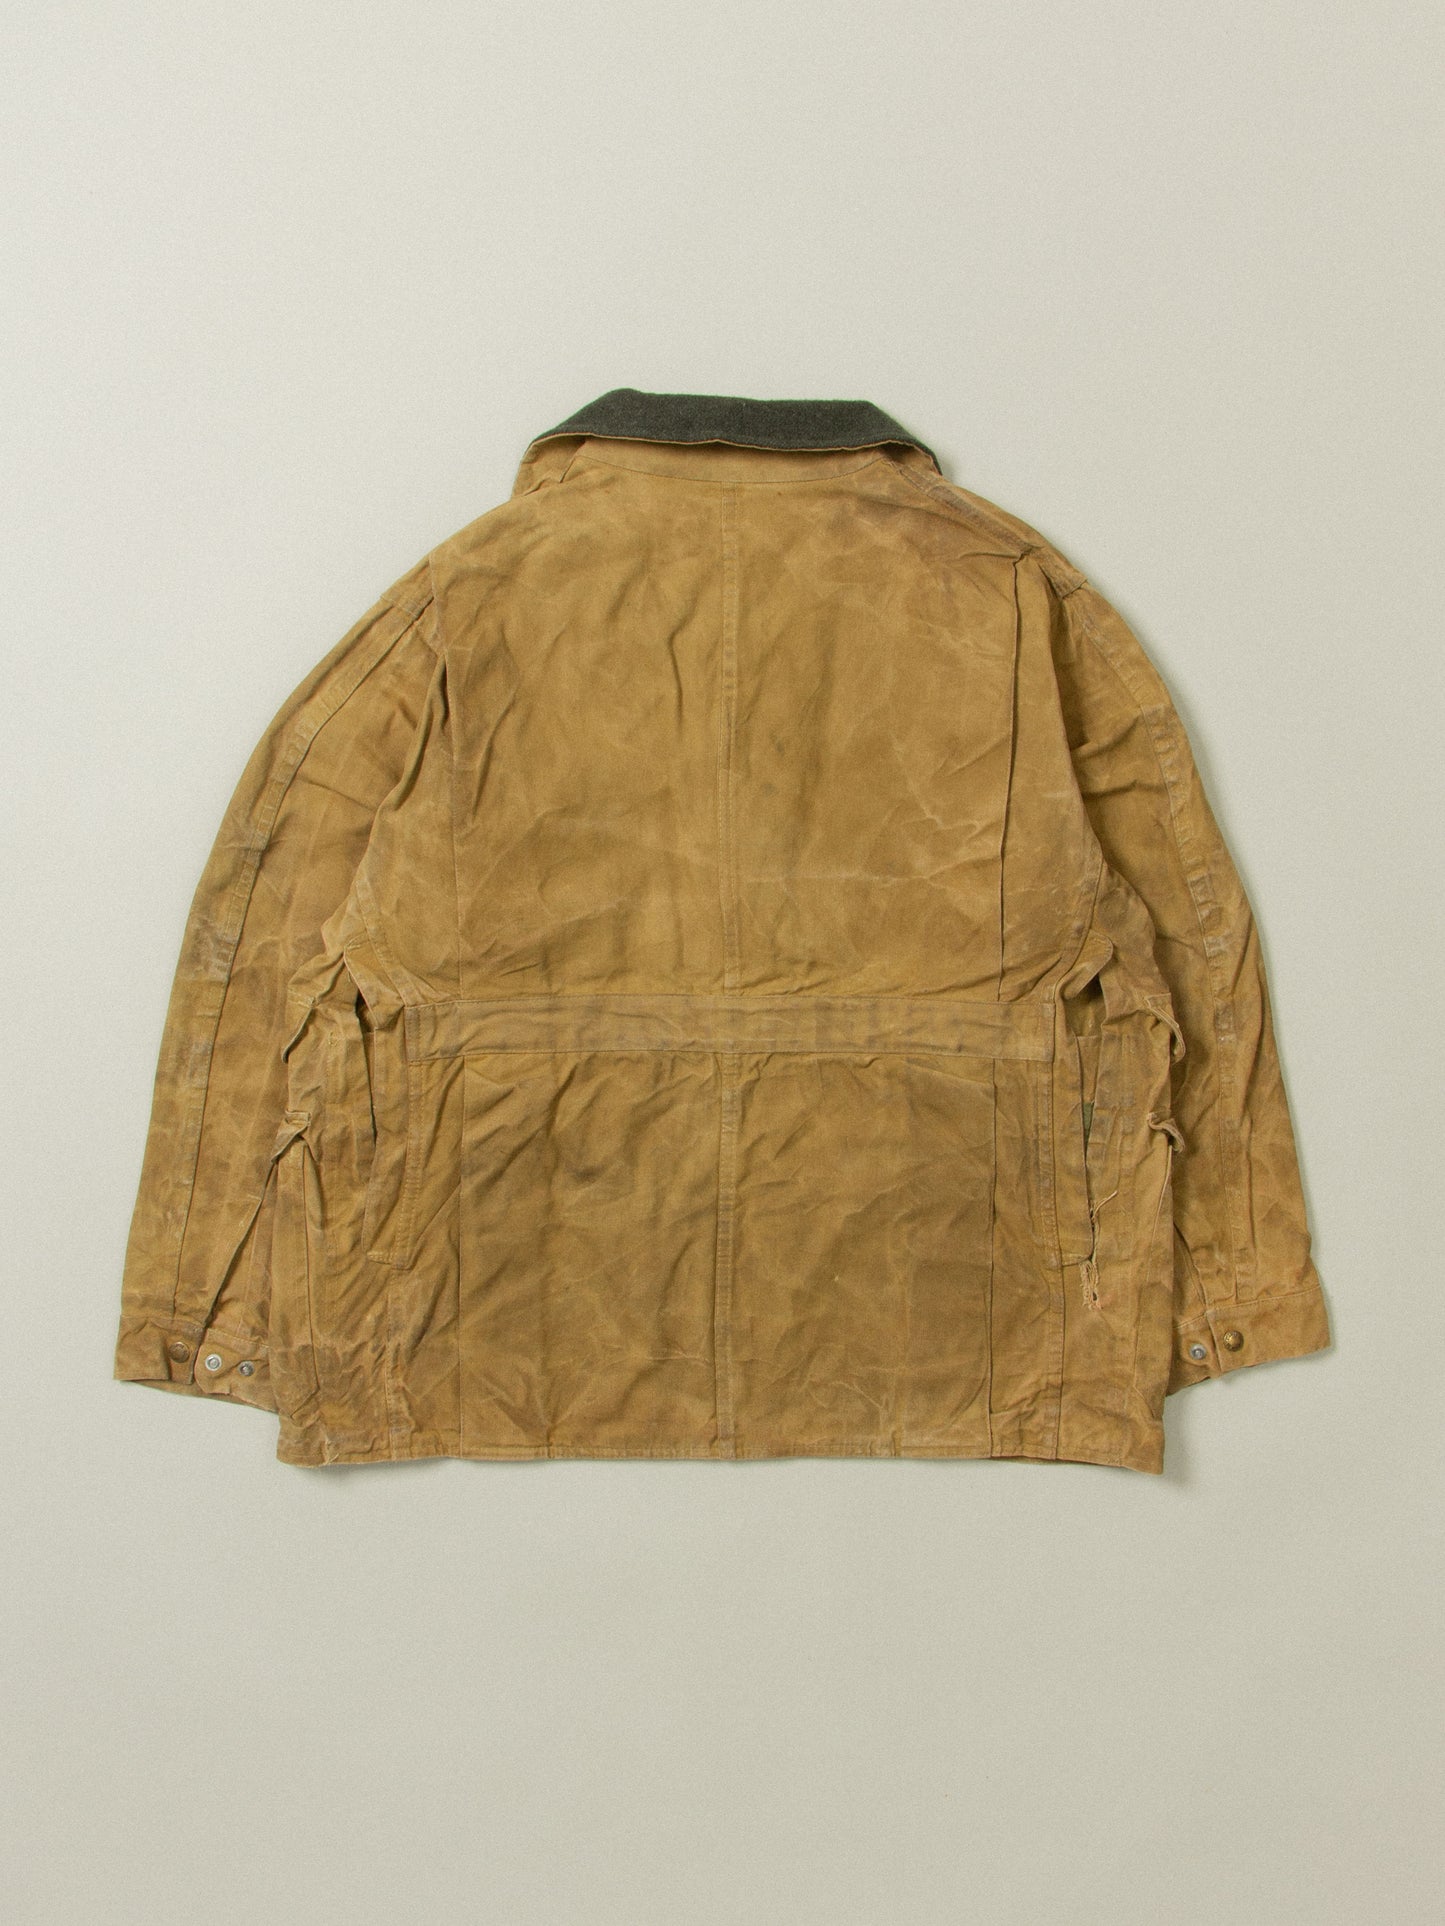 Vtg 1960s Filson Garment Hunting Jacket - Made in USA (M)